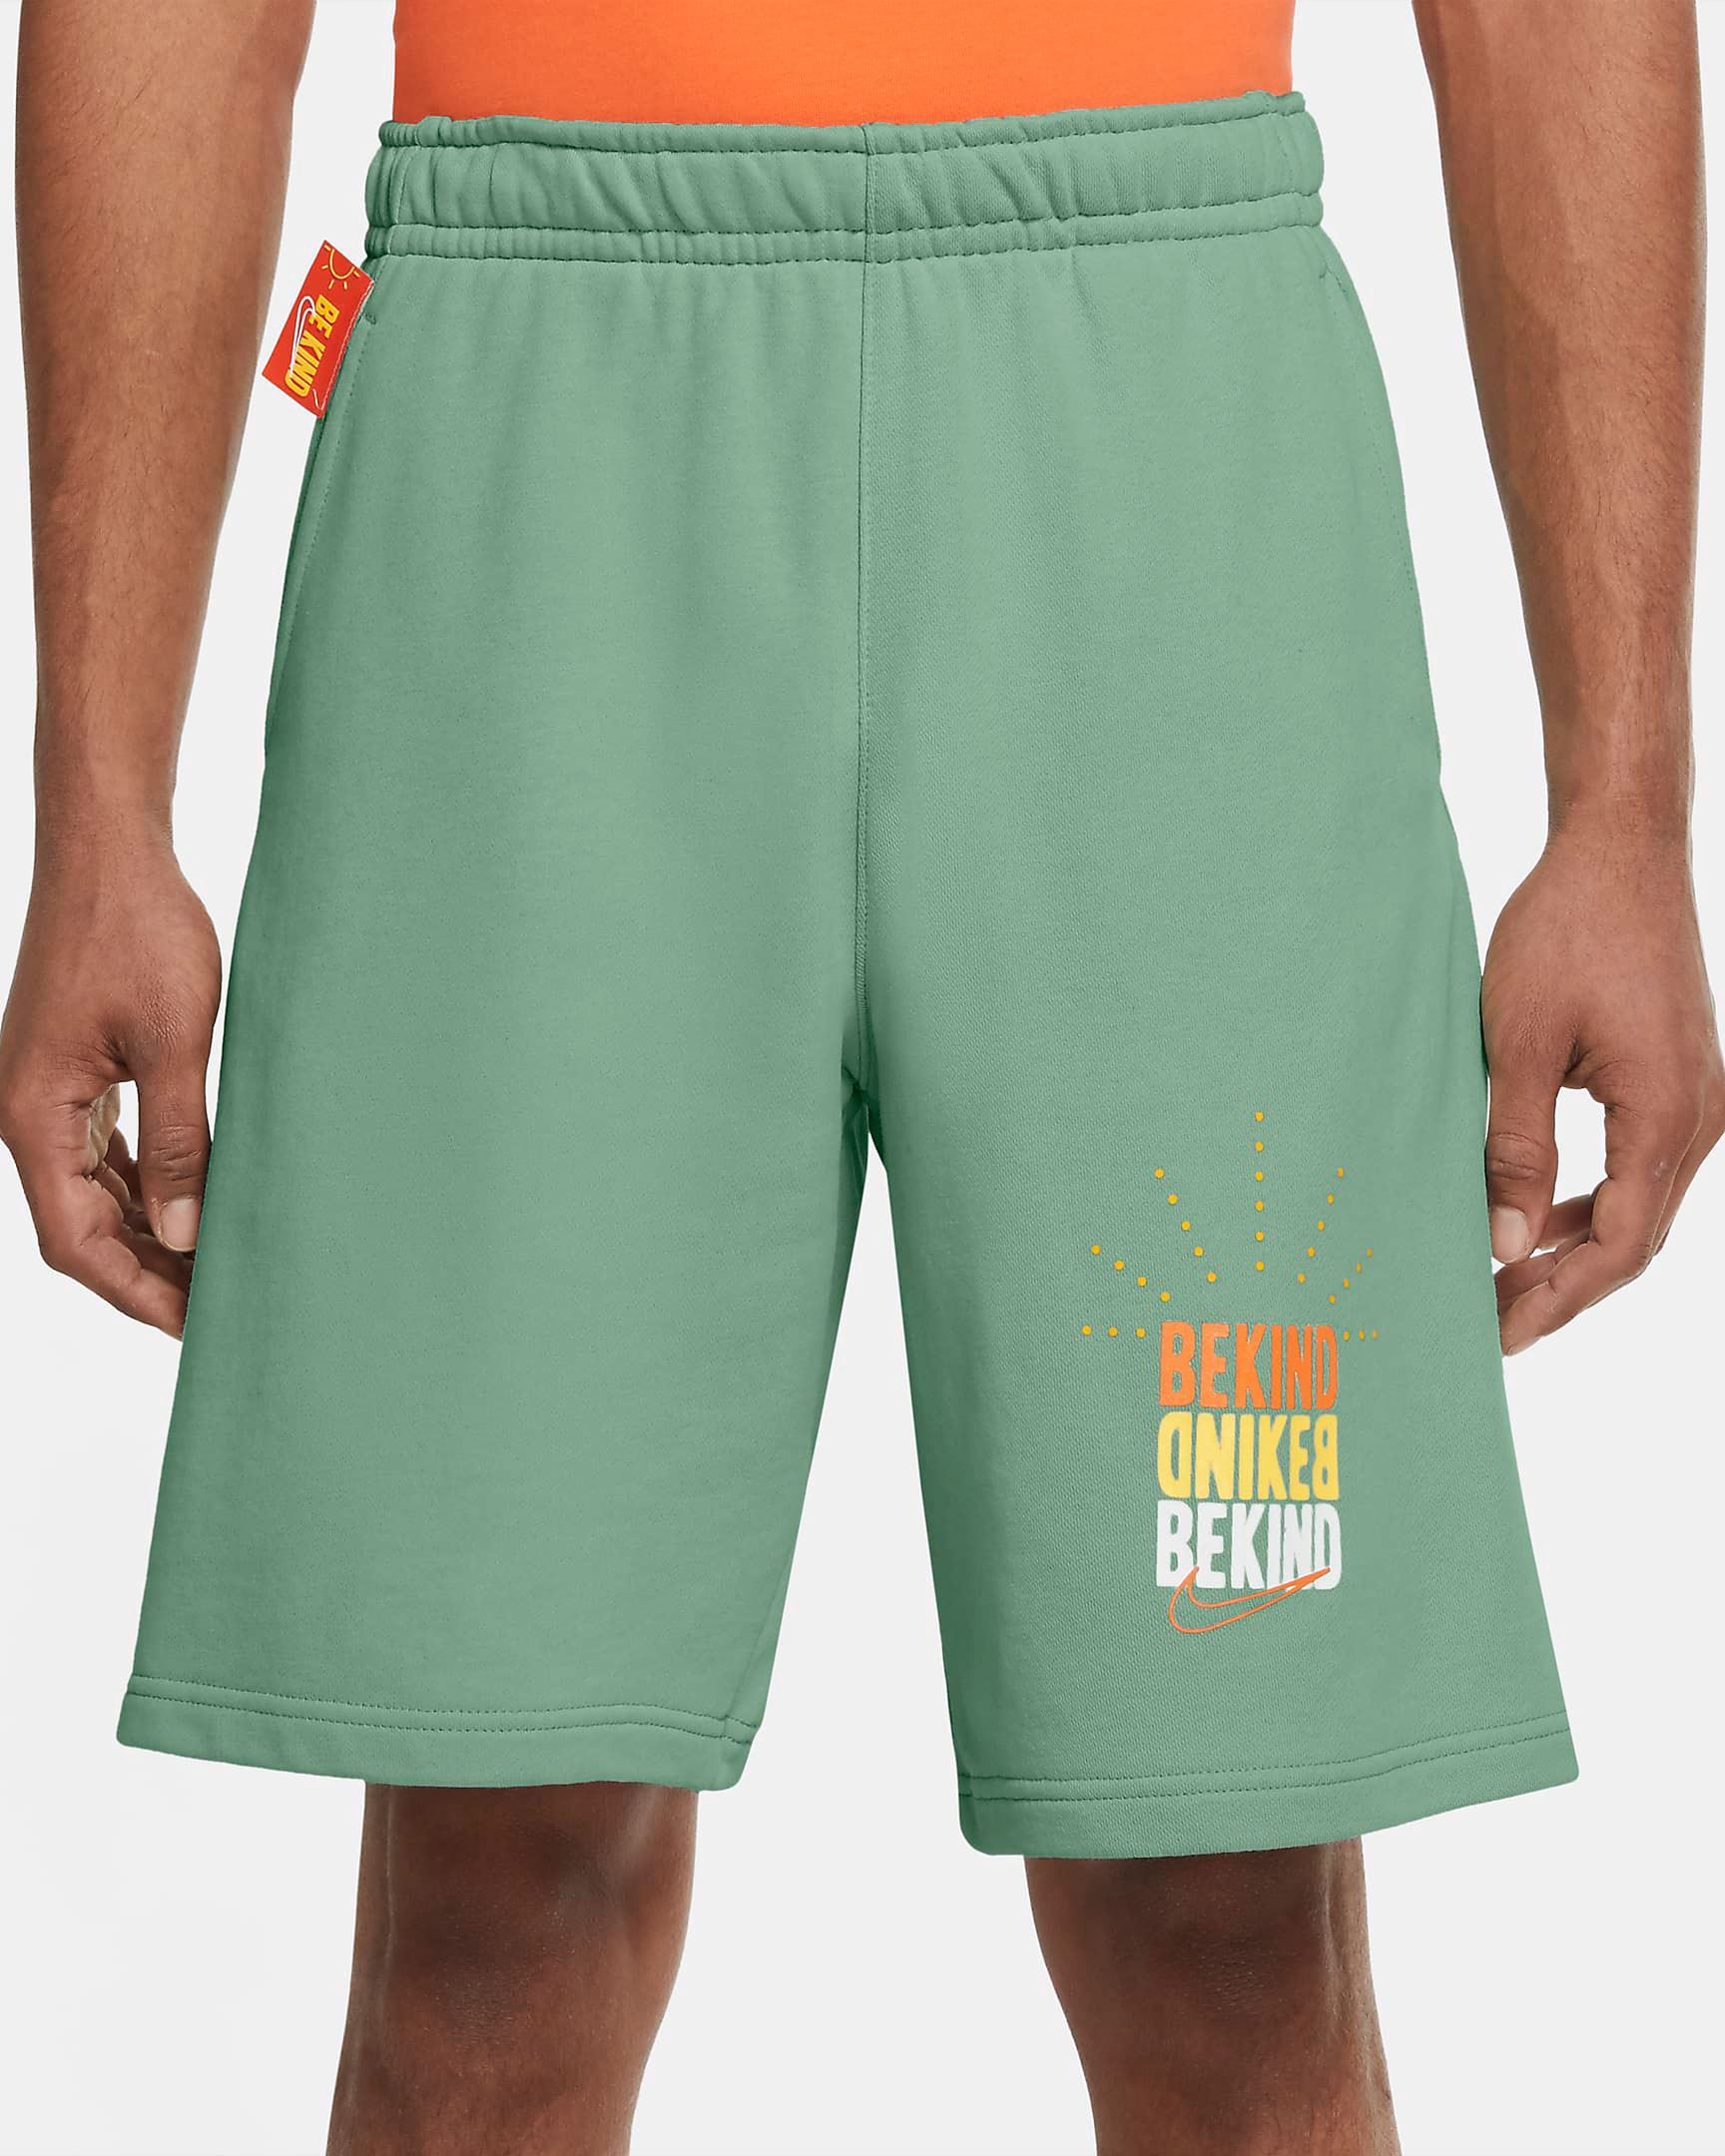 nike-sportswear-be-kind-green-orange-shorts-1